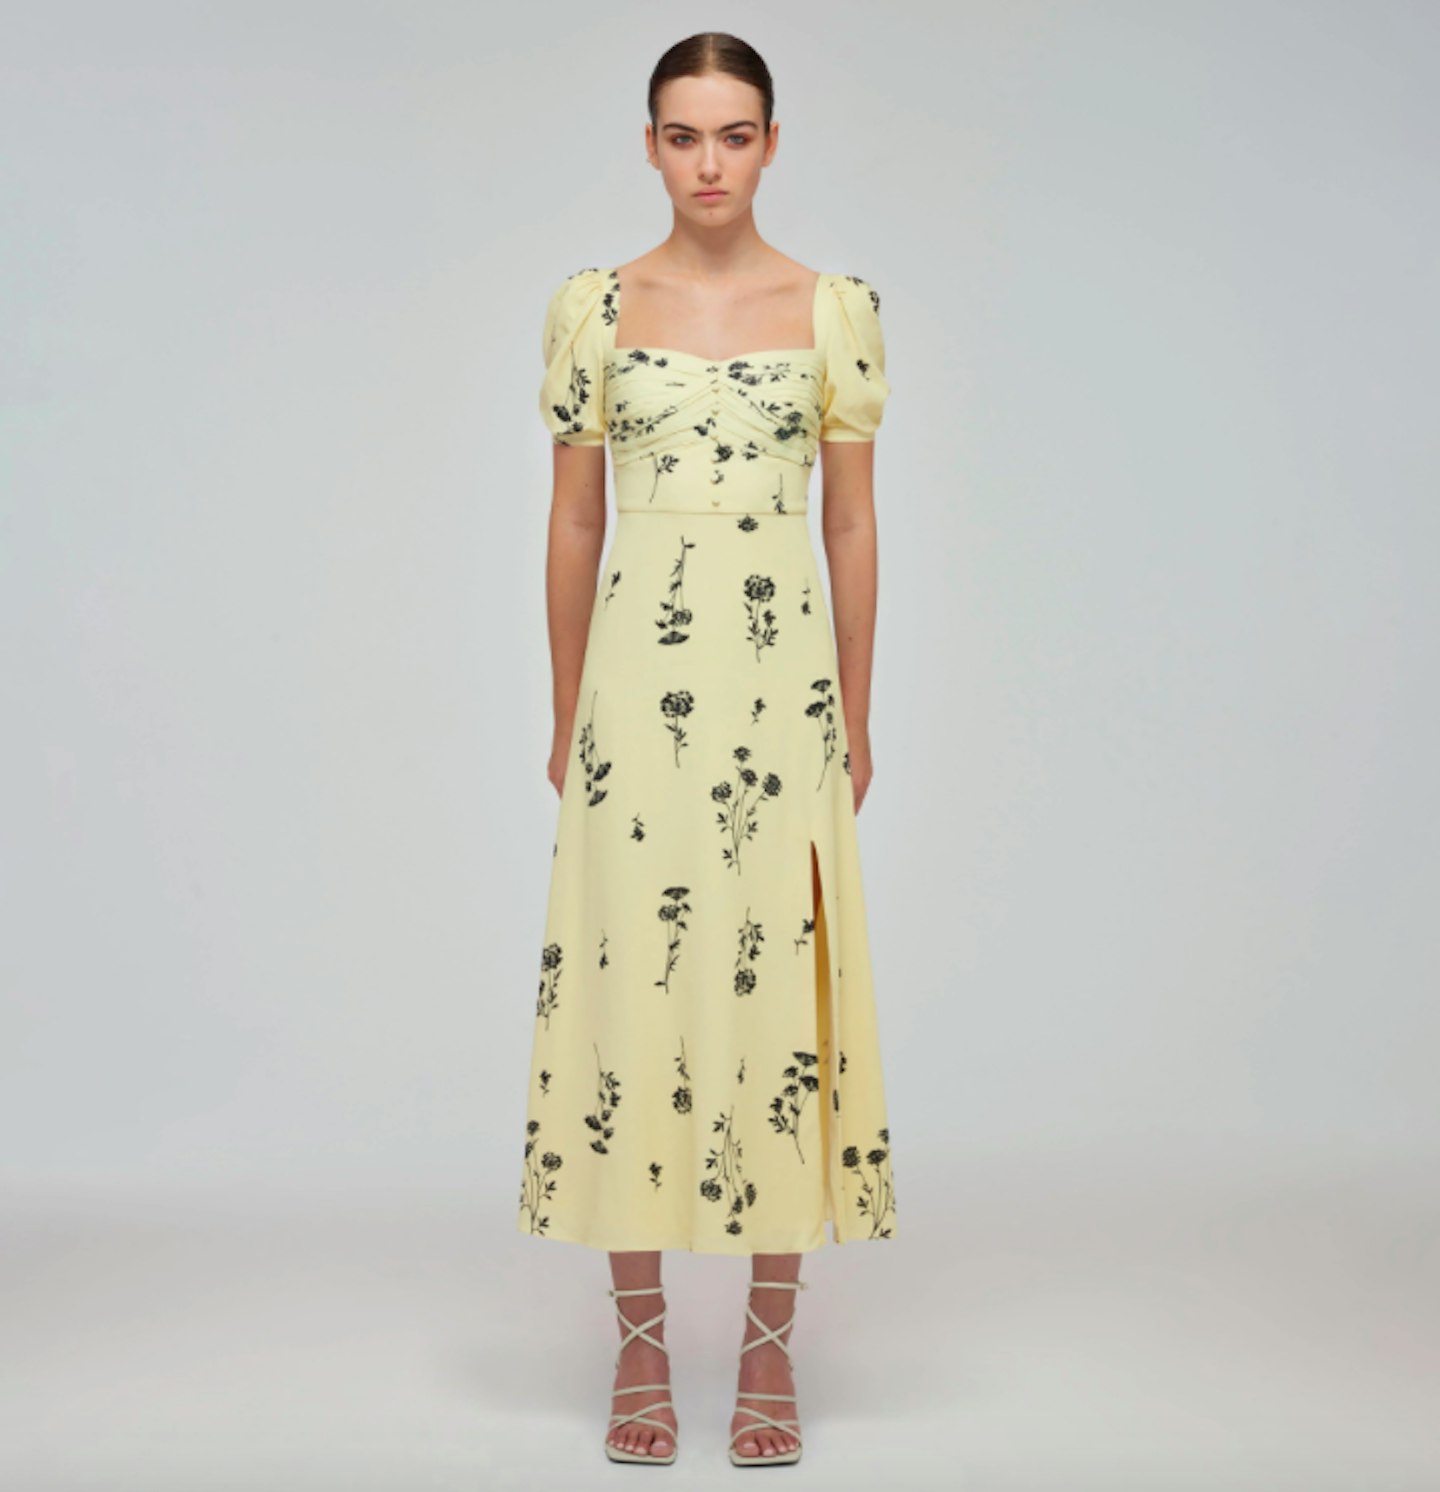 Self-Portrait, Yellow Floral Silhouette Stretch Crepe Midi Dress, £350